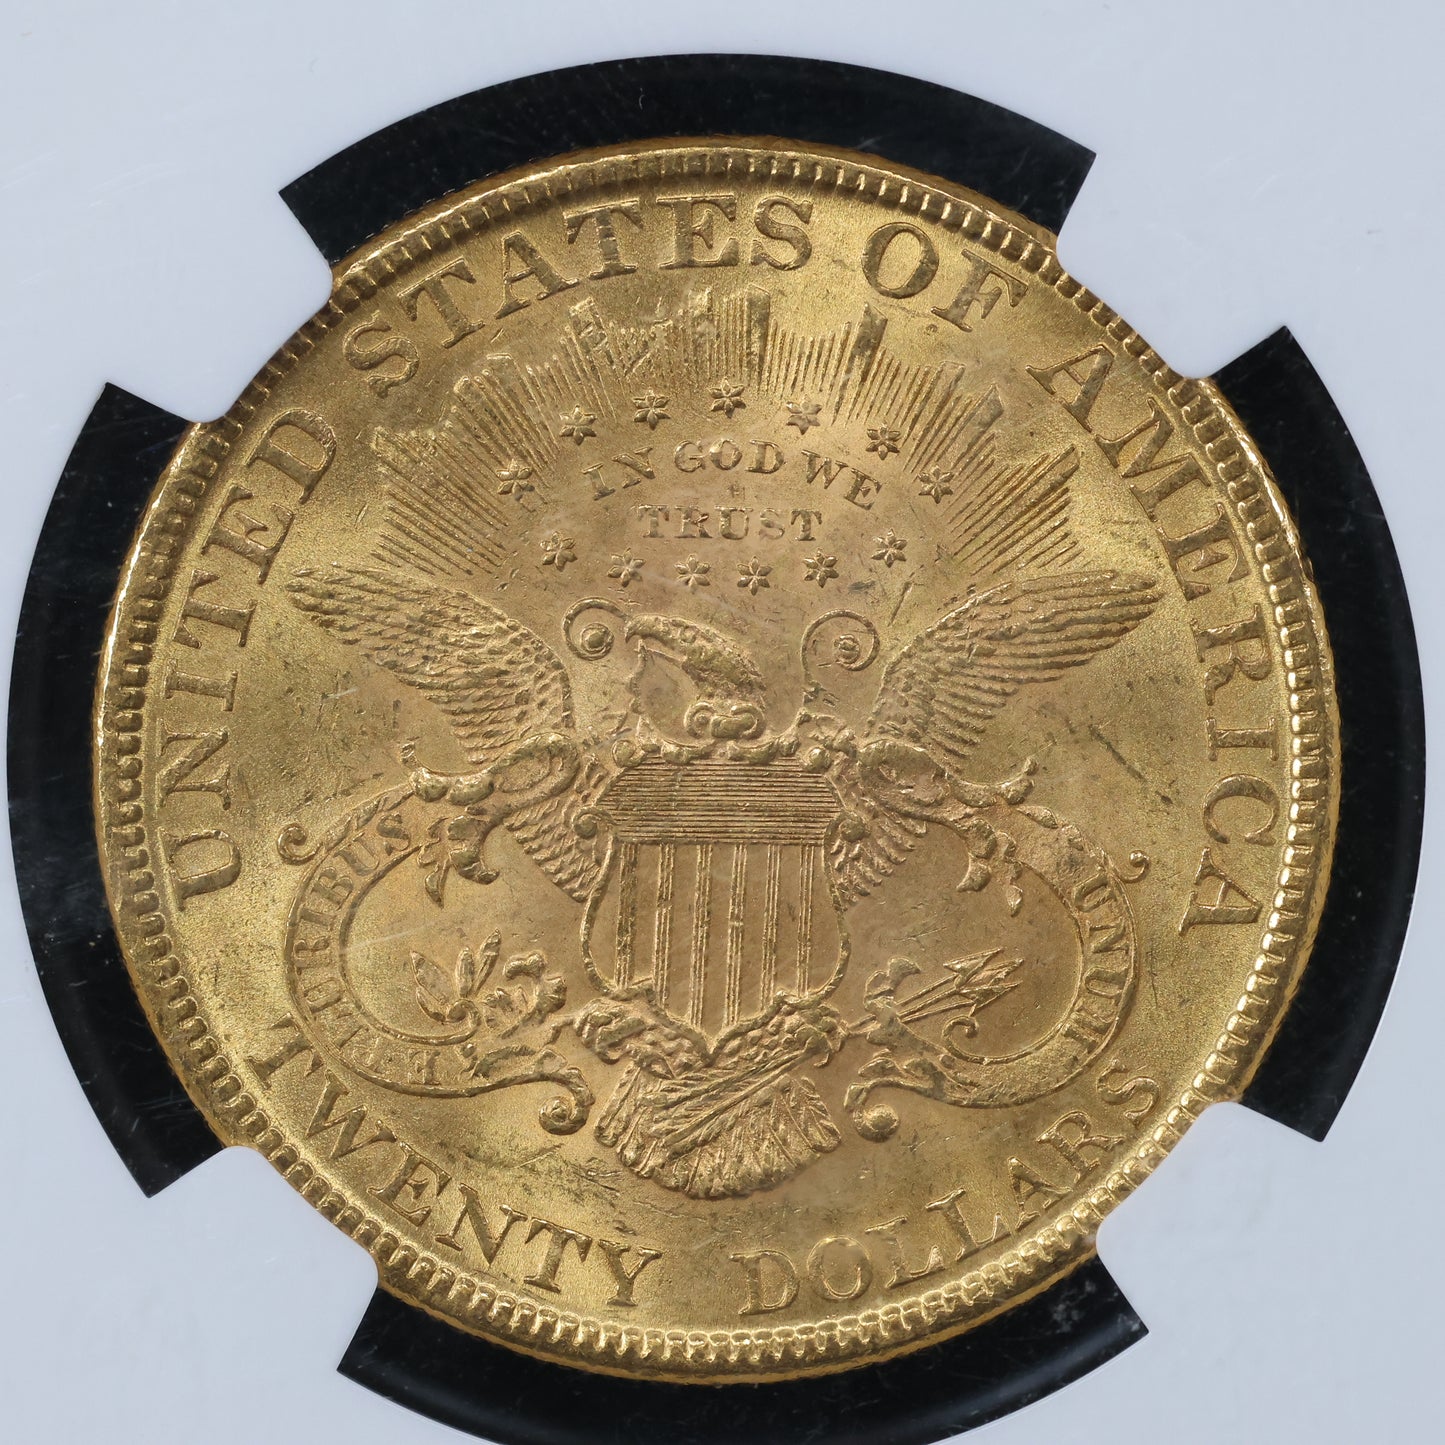 1896 (Philadelphia) $20 Liberty Head US Gold Double Eagle Coin - NGC MS 61